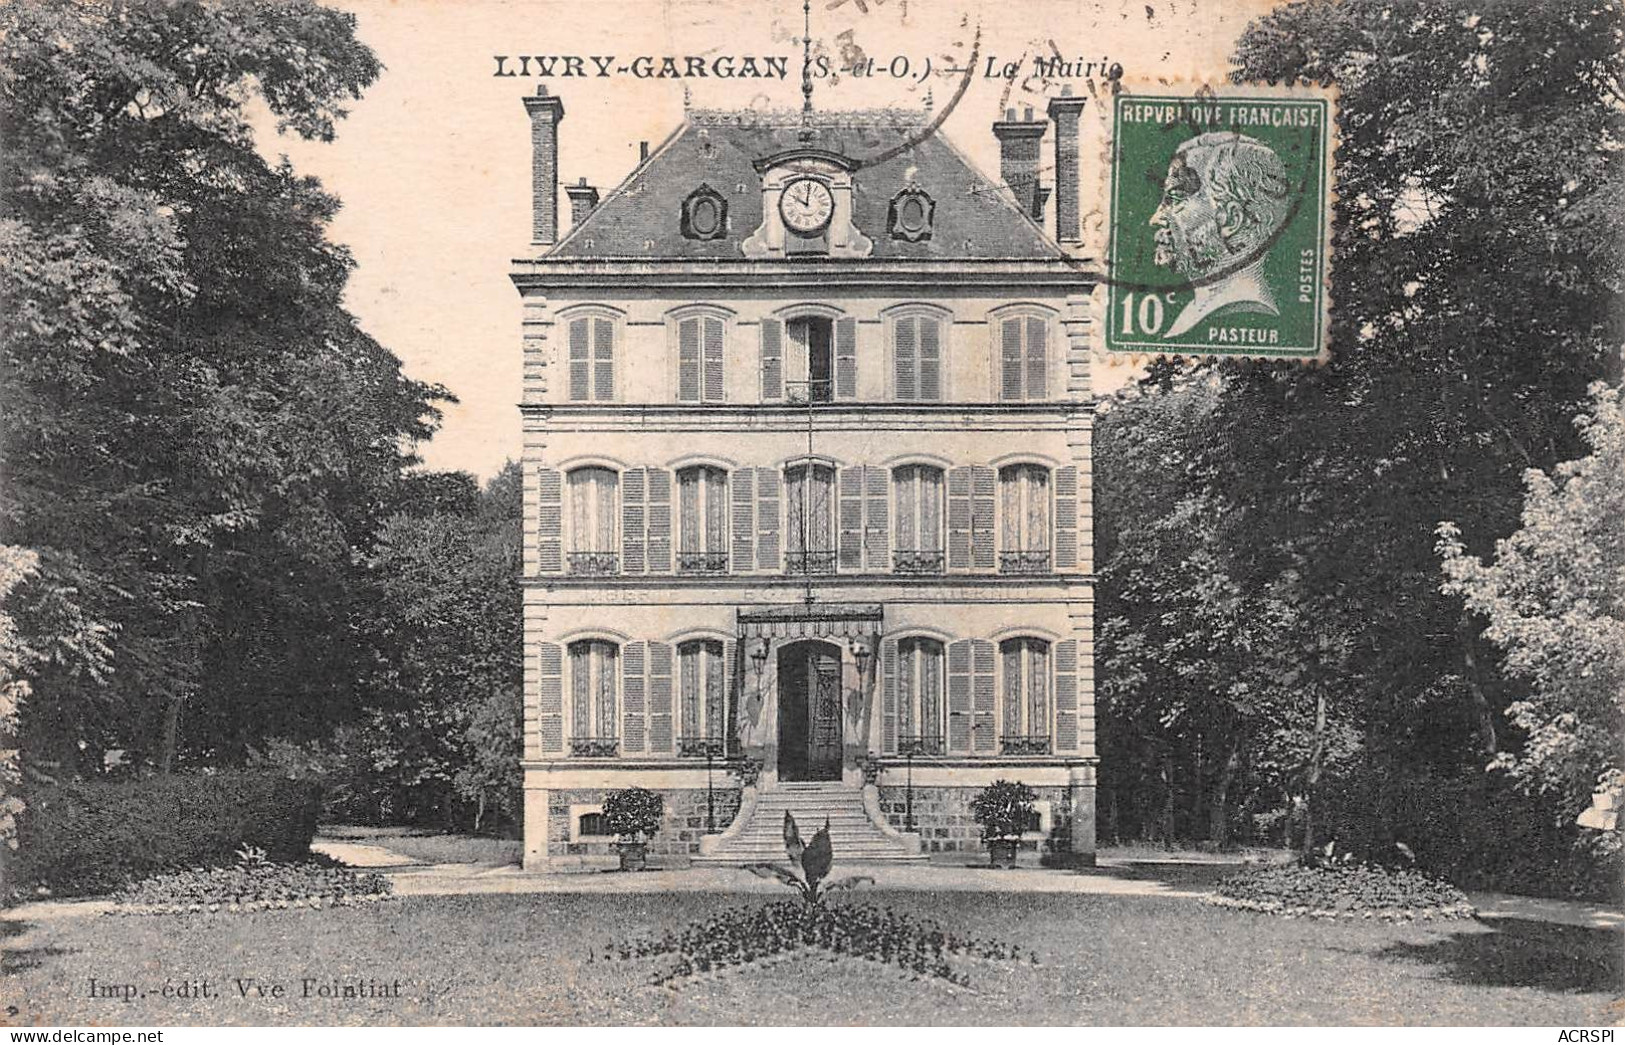 93  Livry-Gargan  La Mairie   (Scan R/V) N°   20   \PP1099Und - Livry Gargan